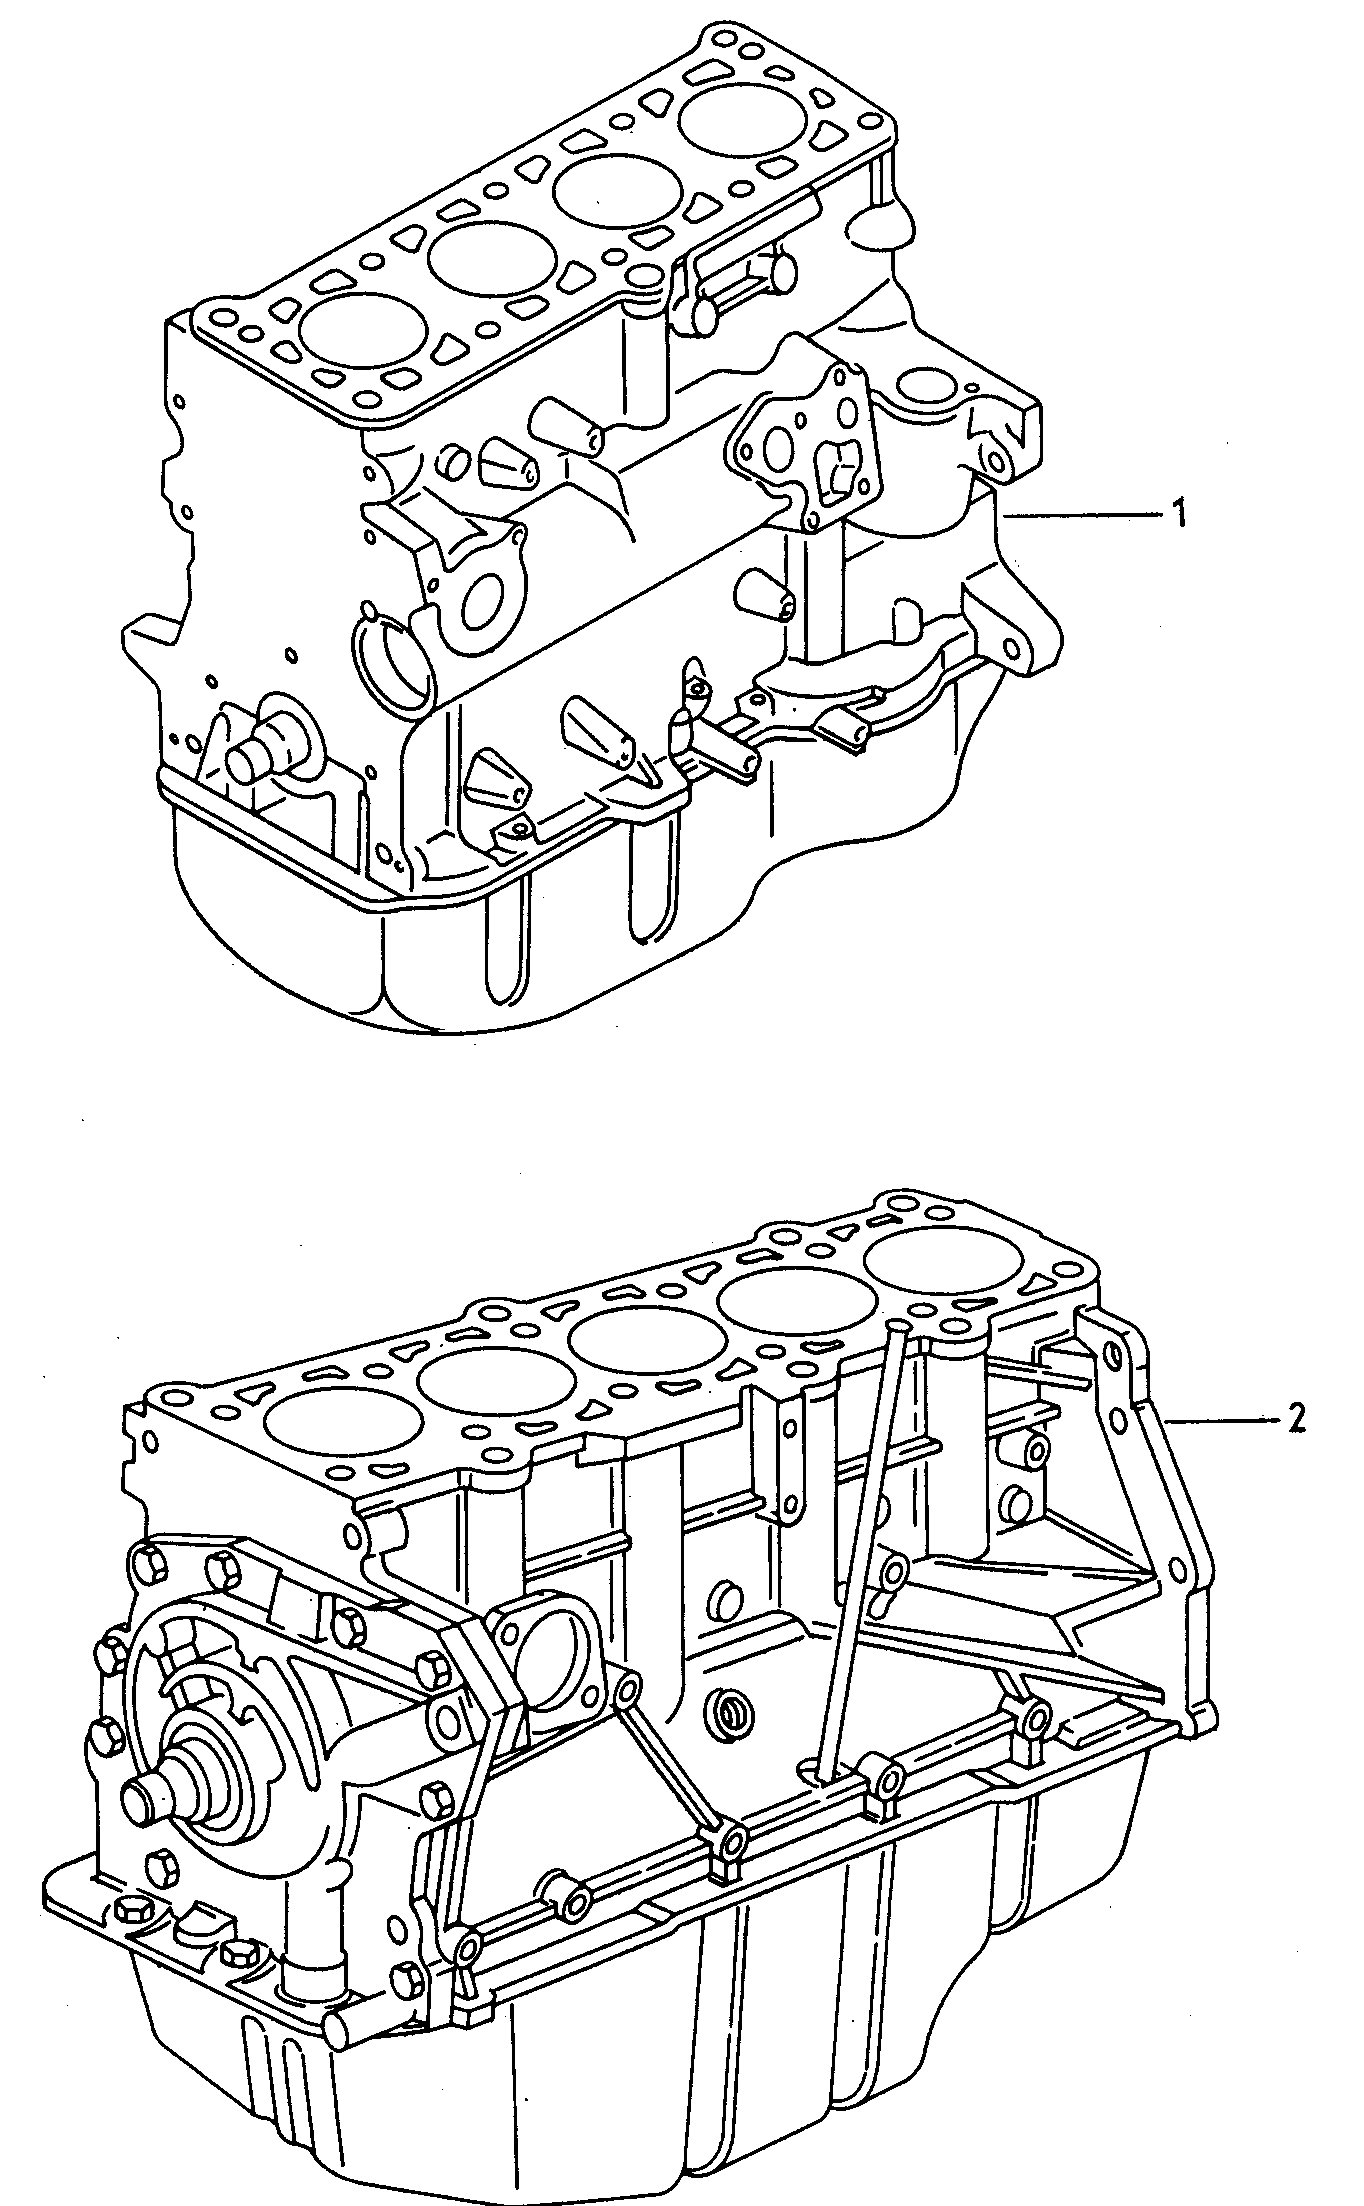 Teilmotor mit Kurbelwelle,
Kolben, Oelpumpe und O... - Transporter(TR)  